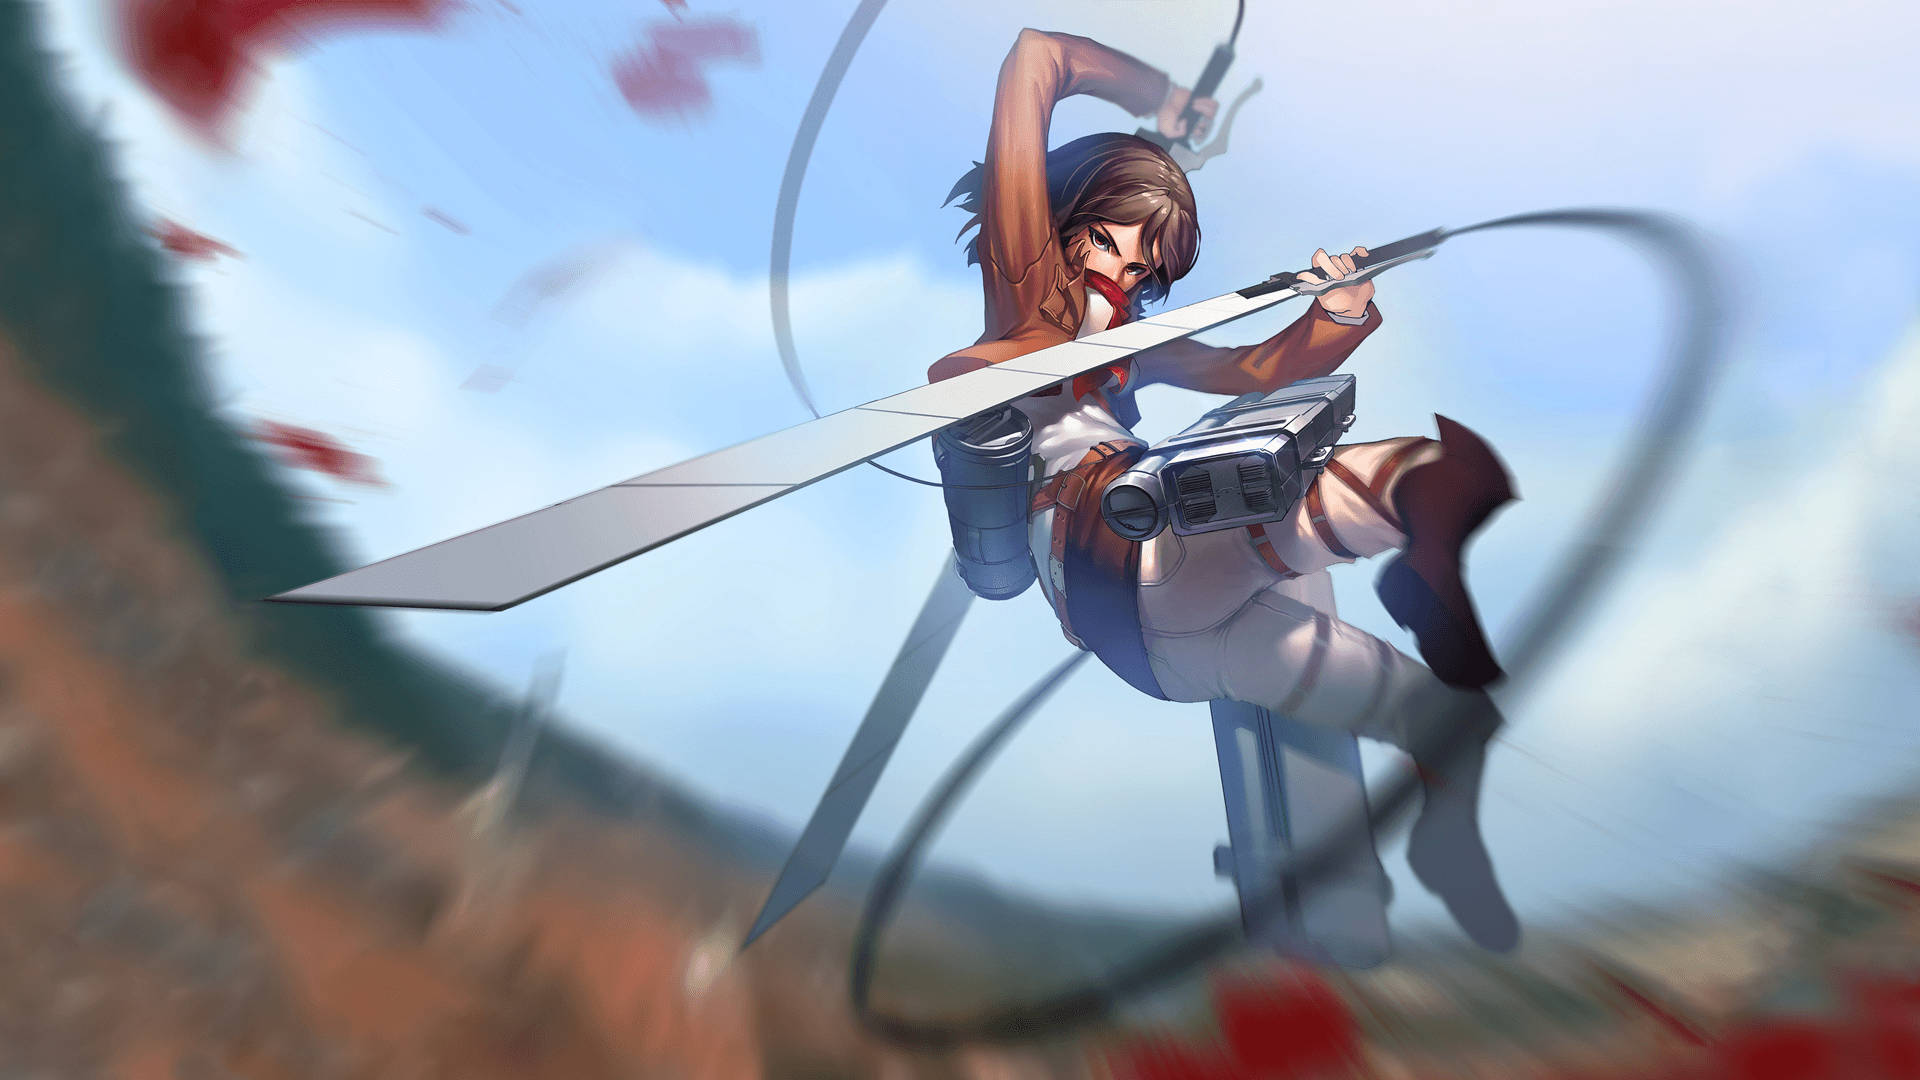 Hd Anime Mikasa Wallpaper